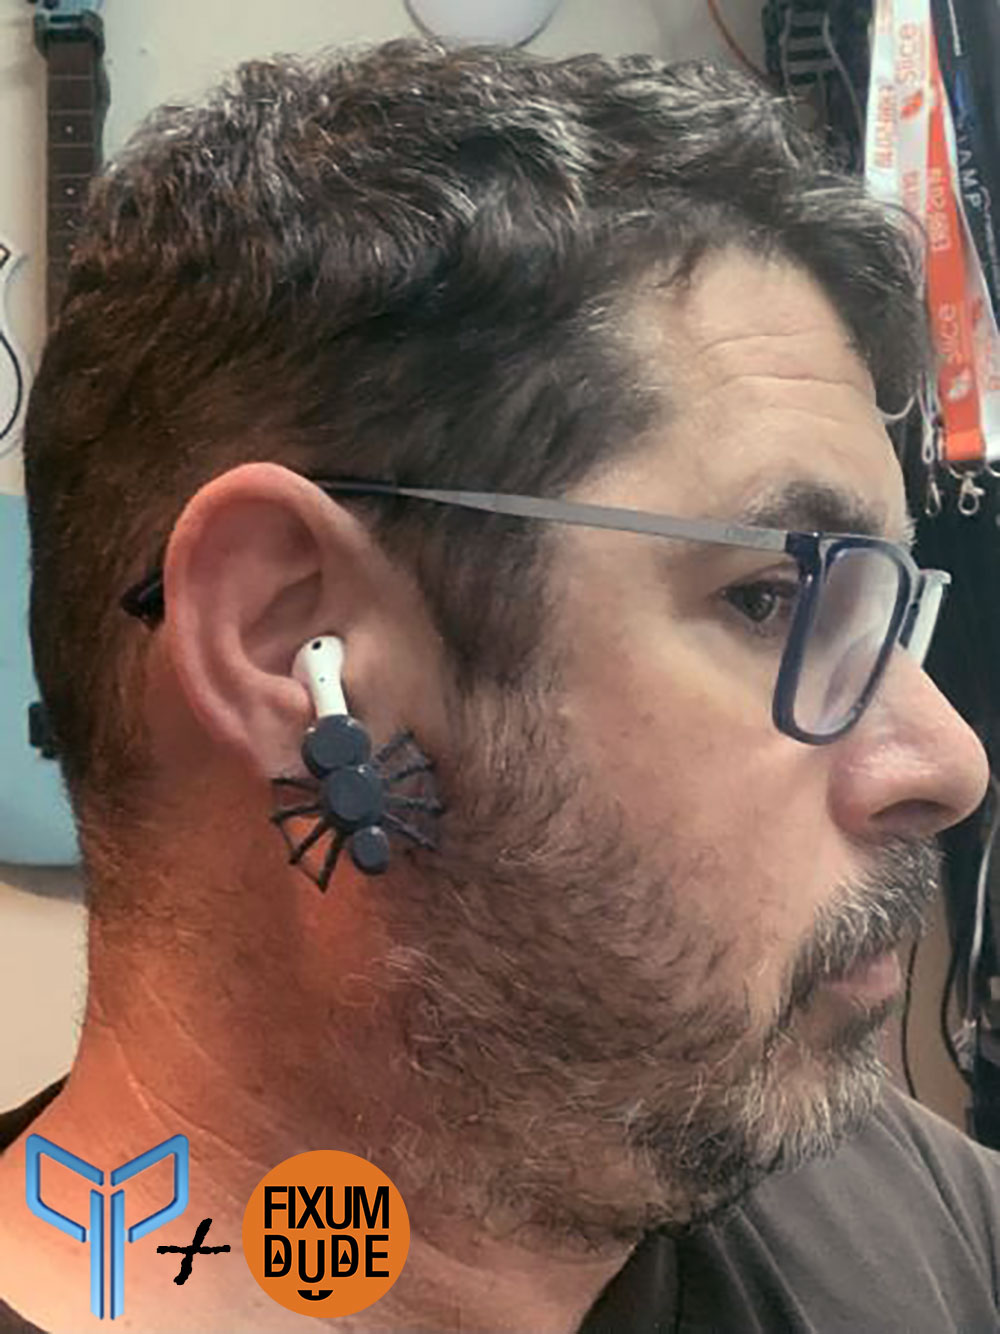 Apple AirPod/EarPod Headphone Creepy Crawly Spiders